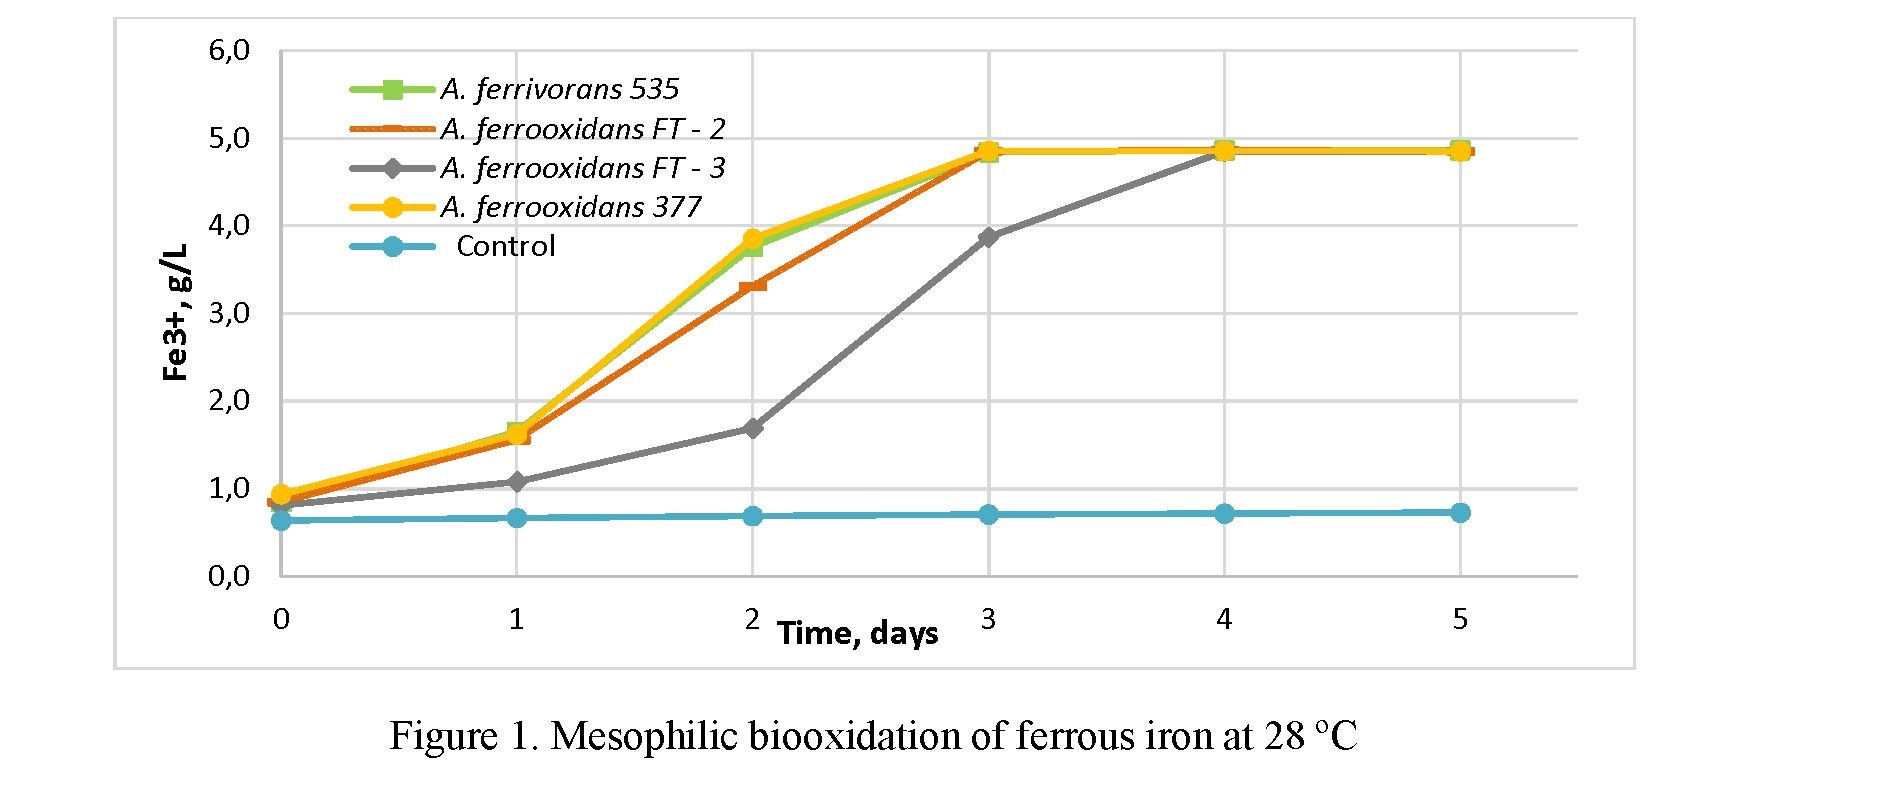 A comparative study on psychrophilic and mesophilic biooxidation of ferrous iron by pure cultures of Acidithiobacillus ferrooxidans and Acidithiobacillus ferrivorans